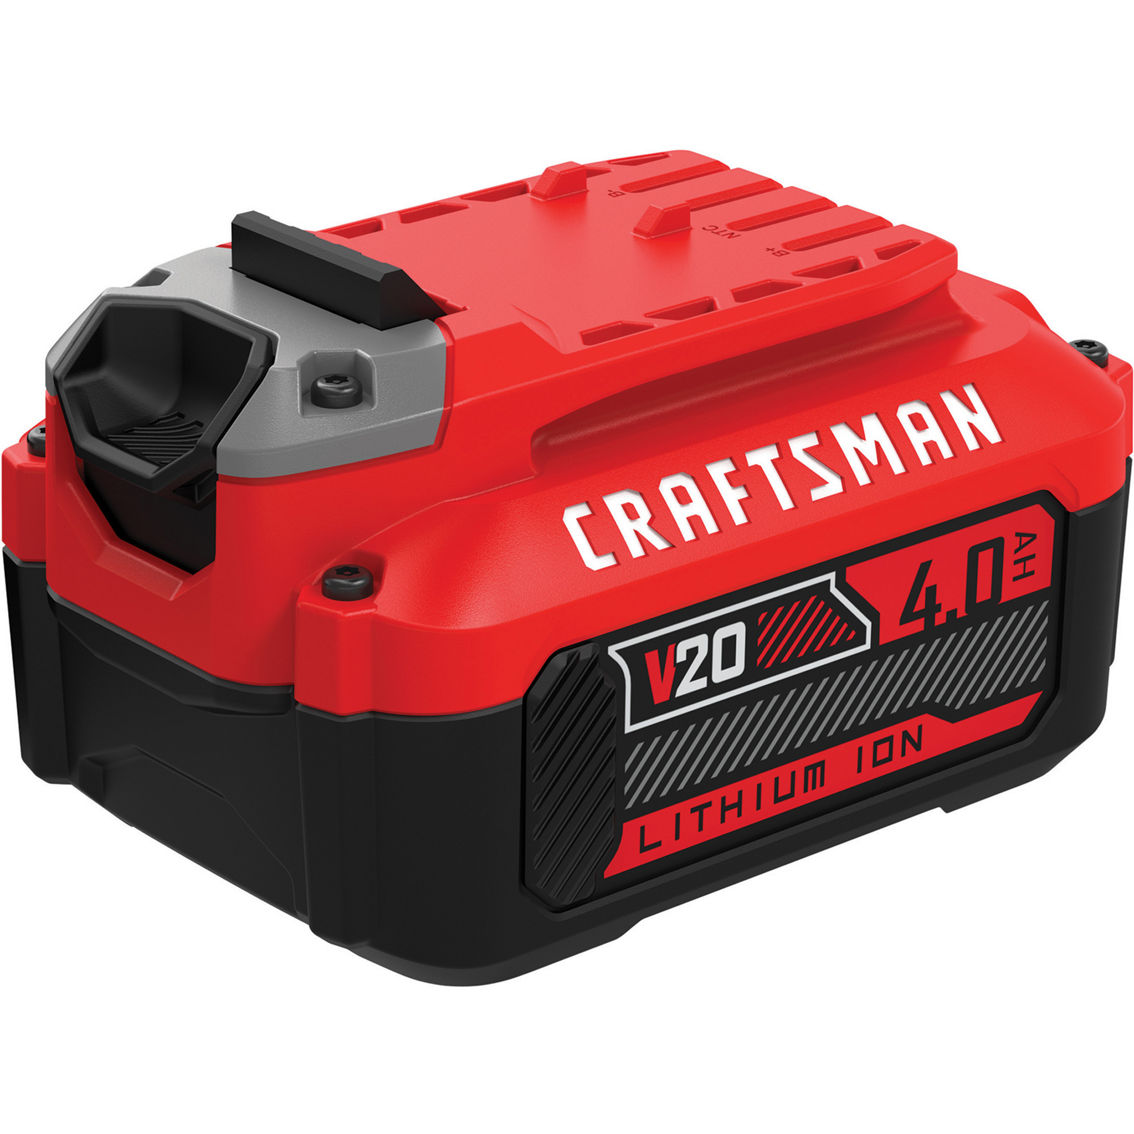 Craftsman V20 4Ah High Capacity Lithium Battery - Image 3 of 5